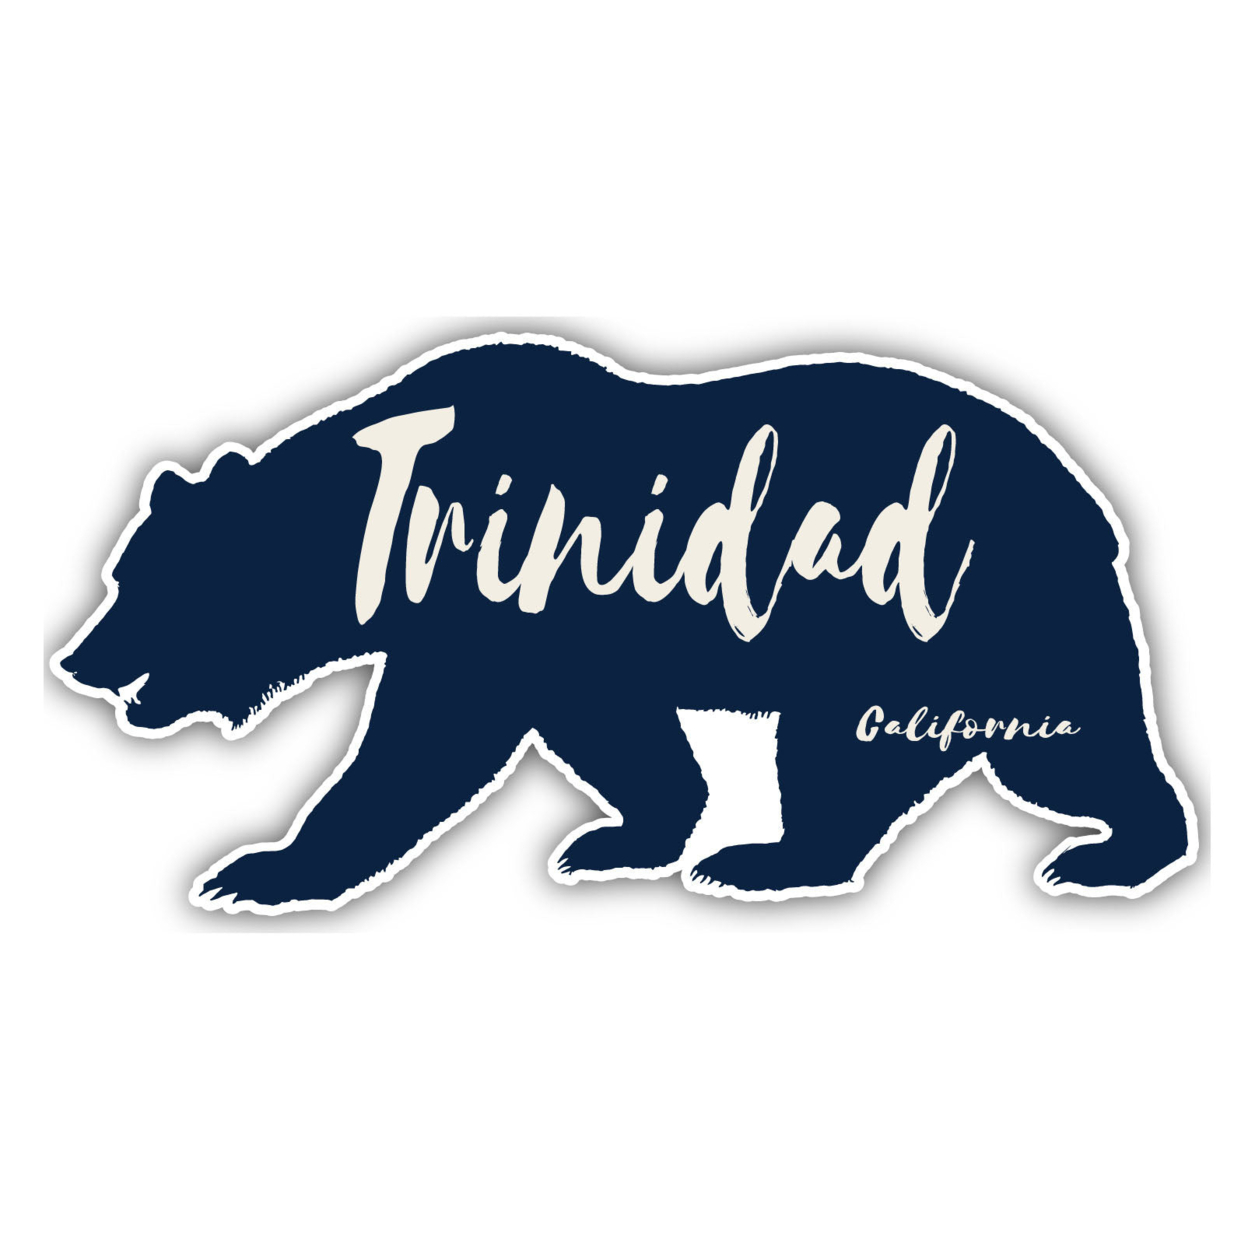 Trinidad California Souvenir Decorative Stickers (Choose Theme And Size) - Single Unit, 4-Inch, Camp Life